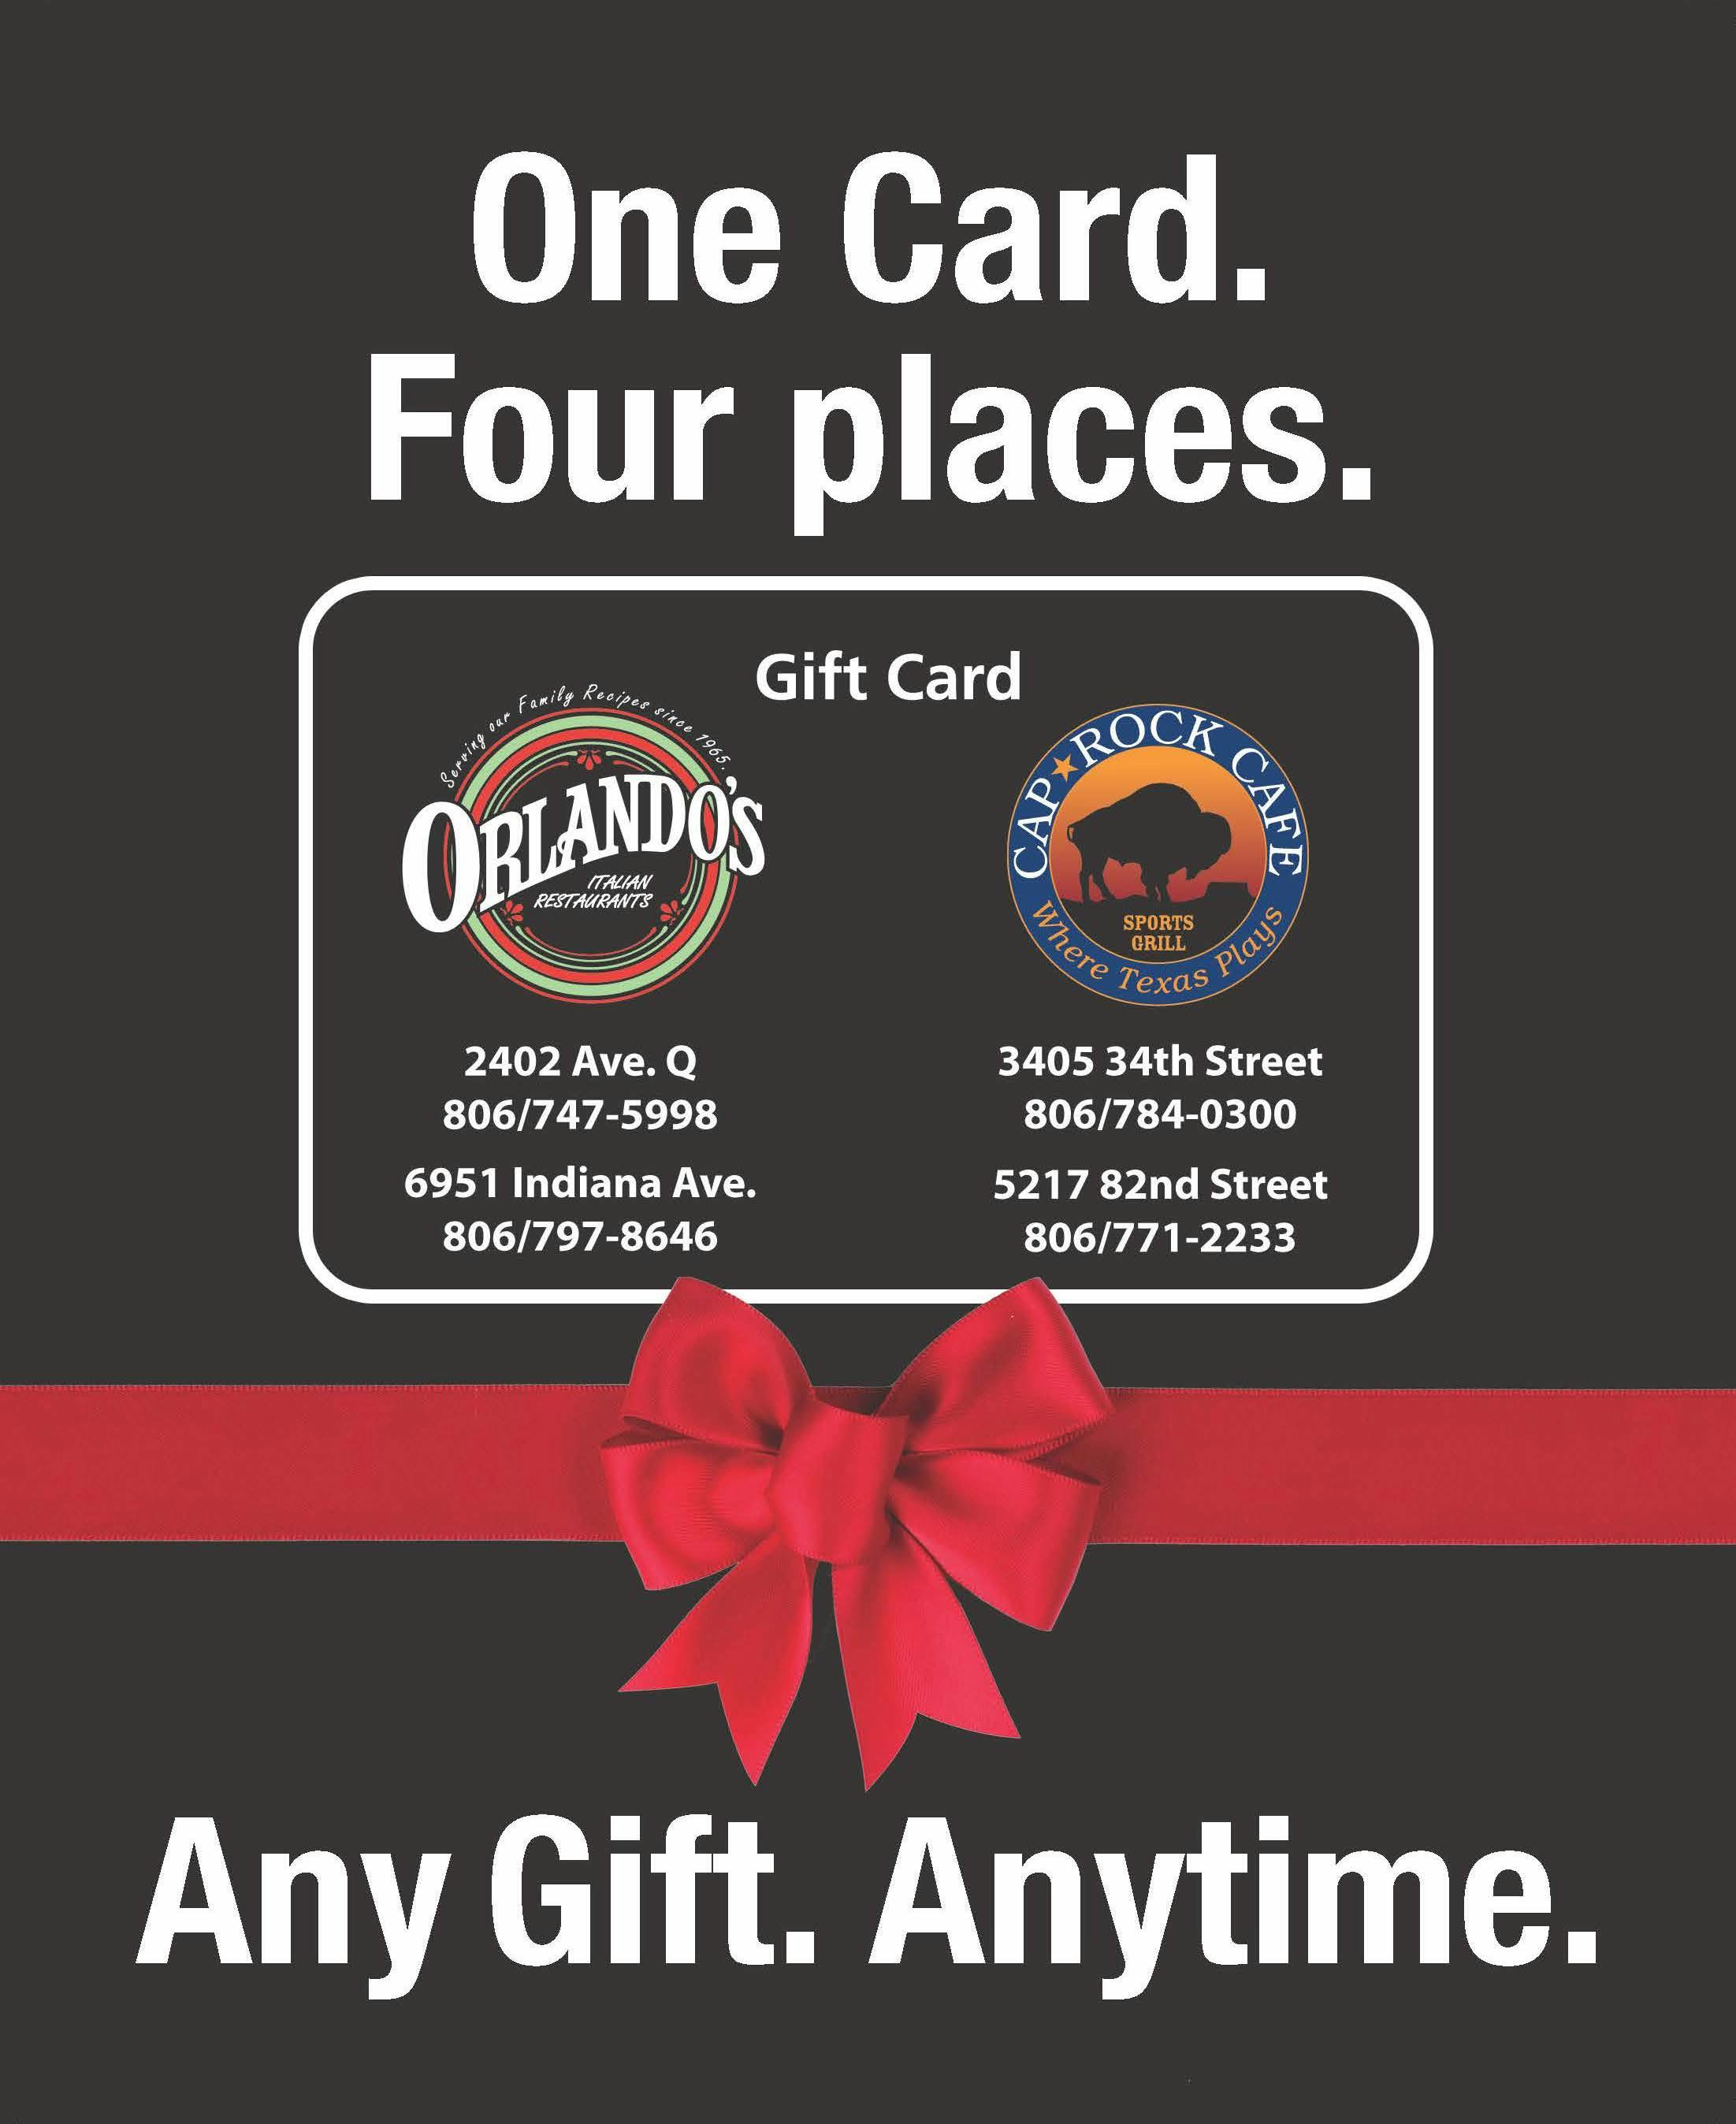 Orlando's Gift Cards